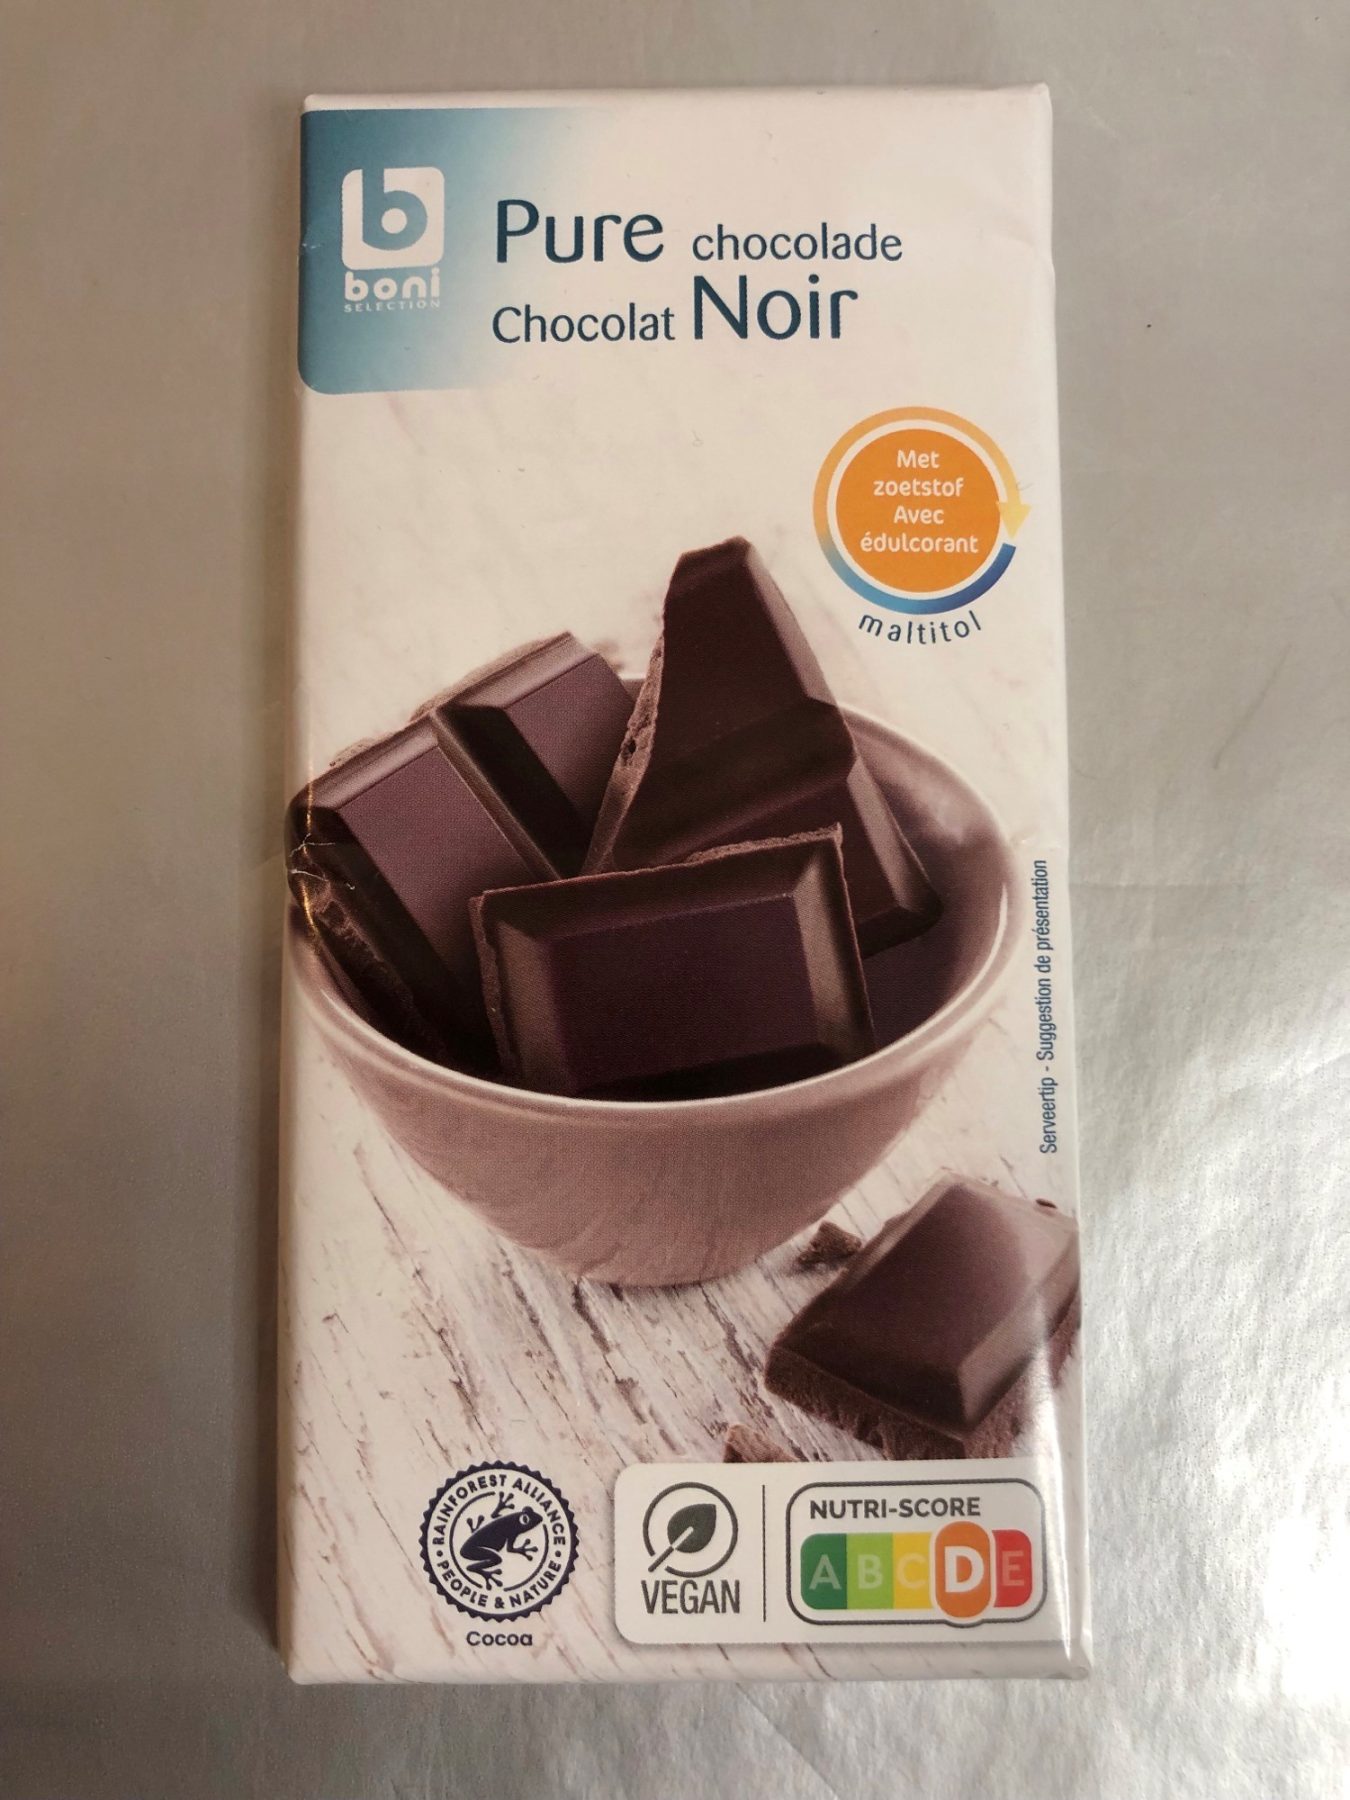 Boni sugar free dark chocolate